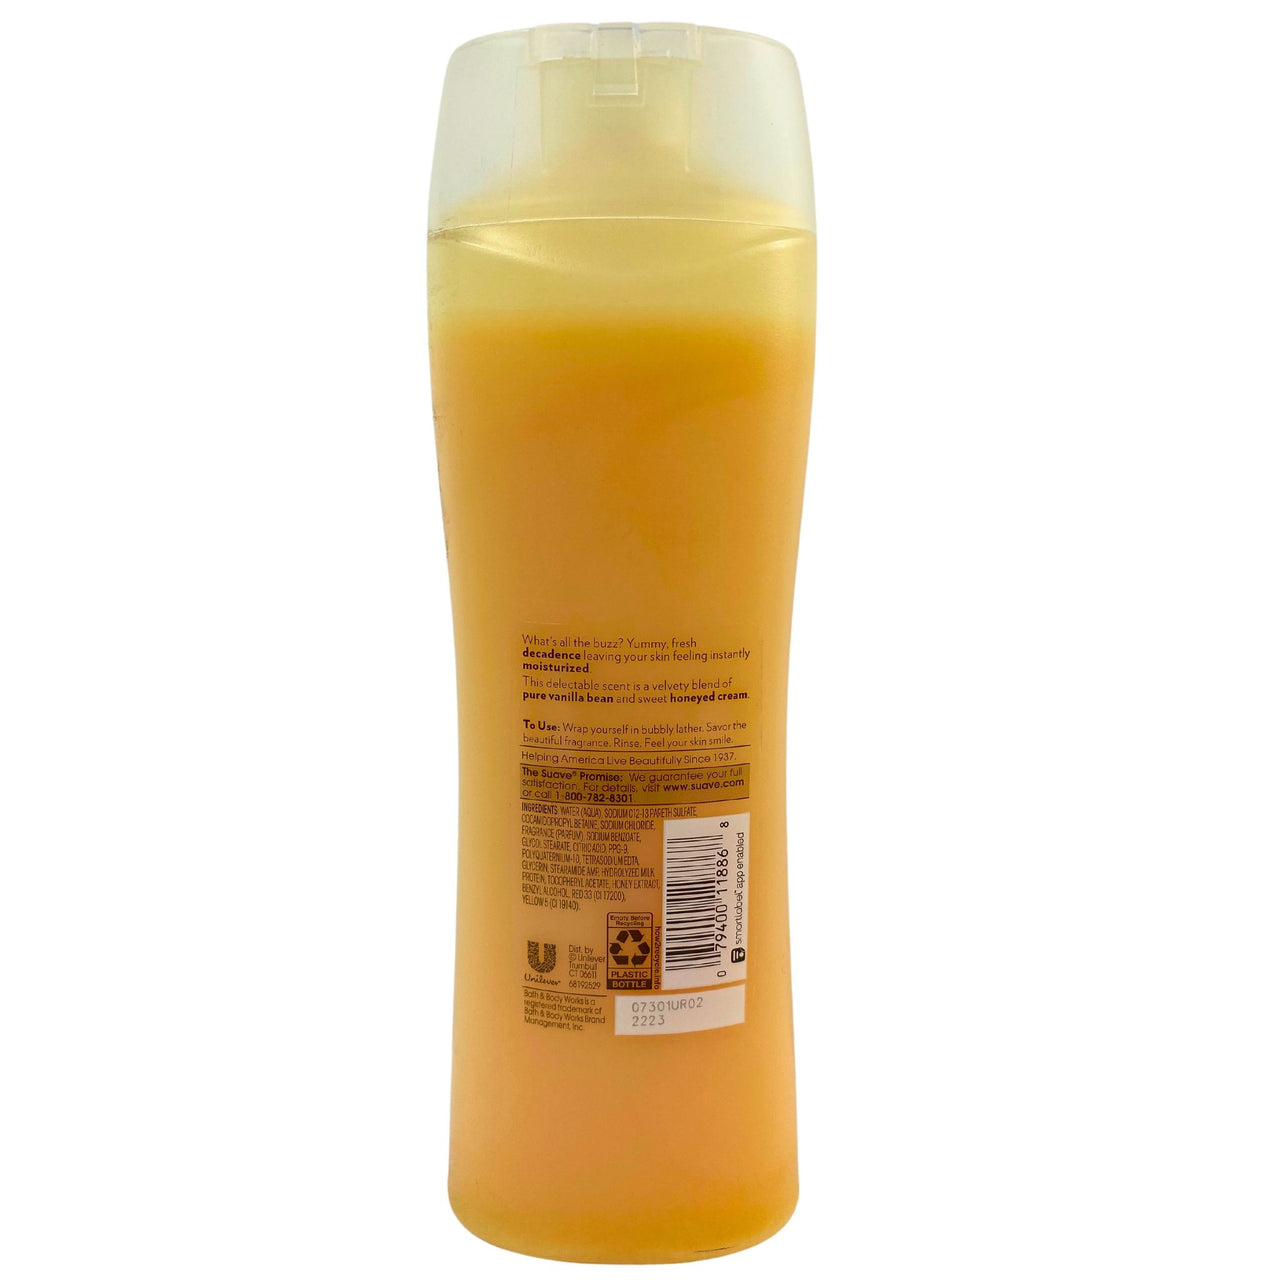 Suave Essentials Milk & Honey Moisturizing Body Wash